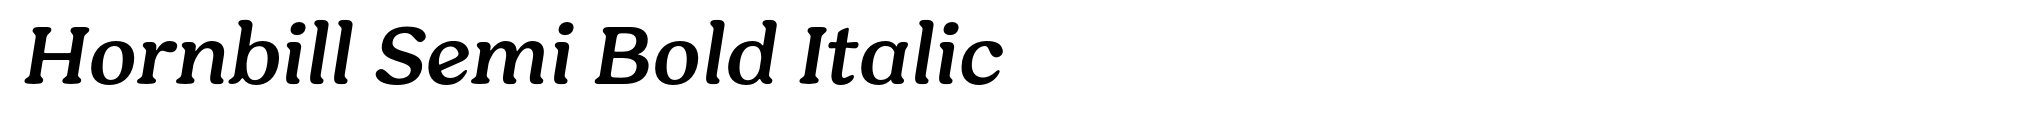 Hornbill Semi Bold Italic image